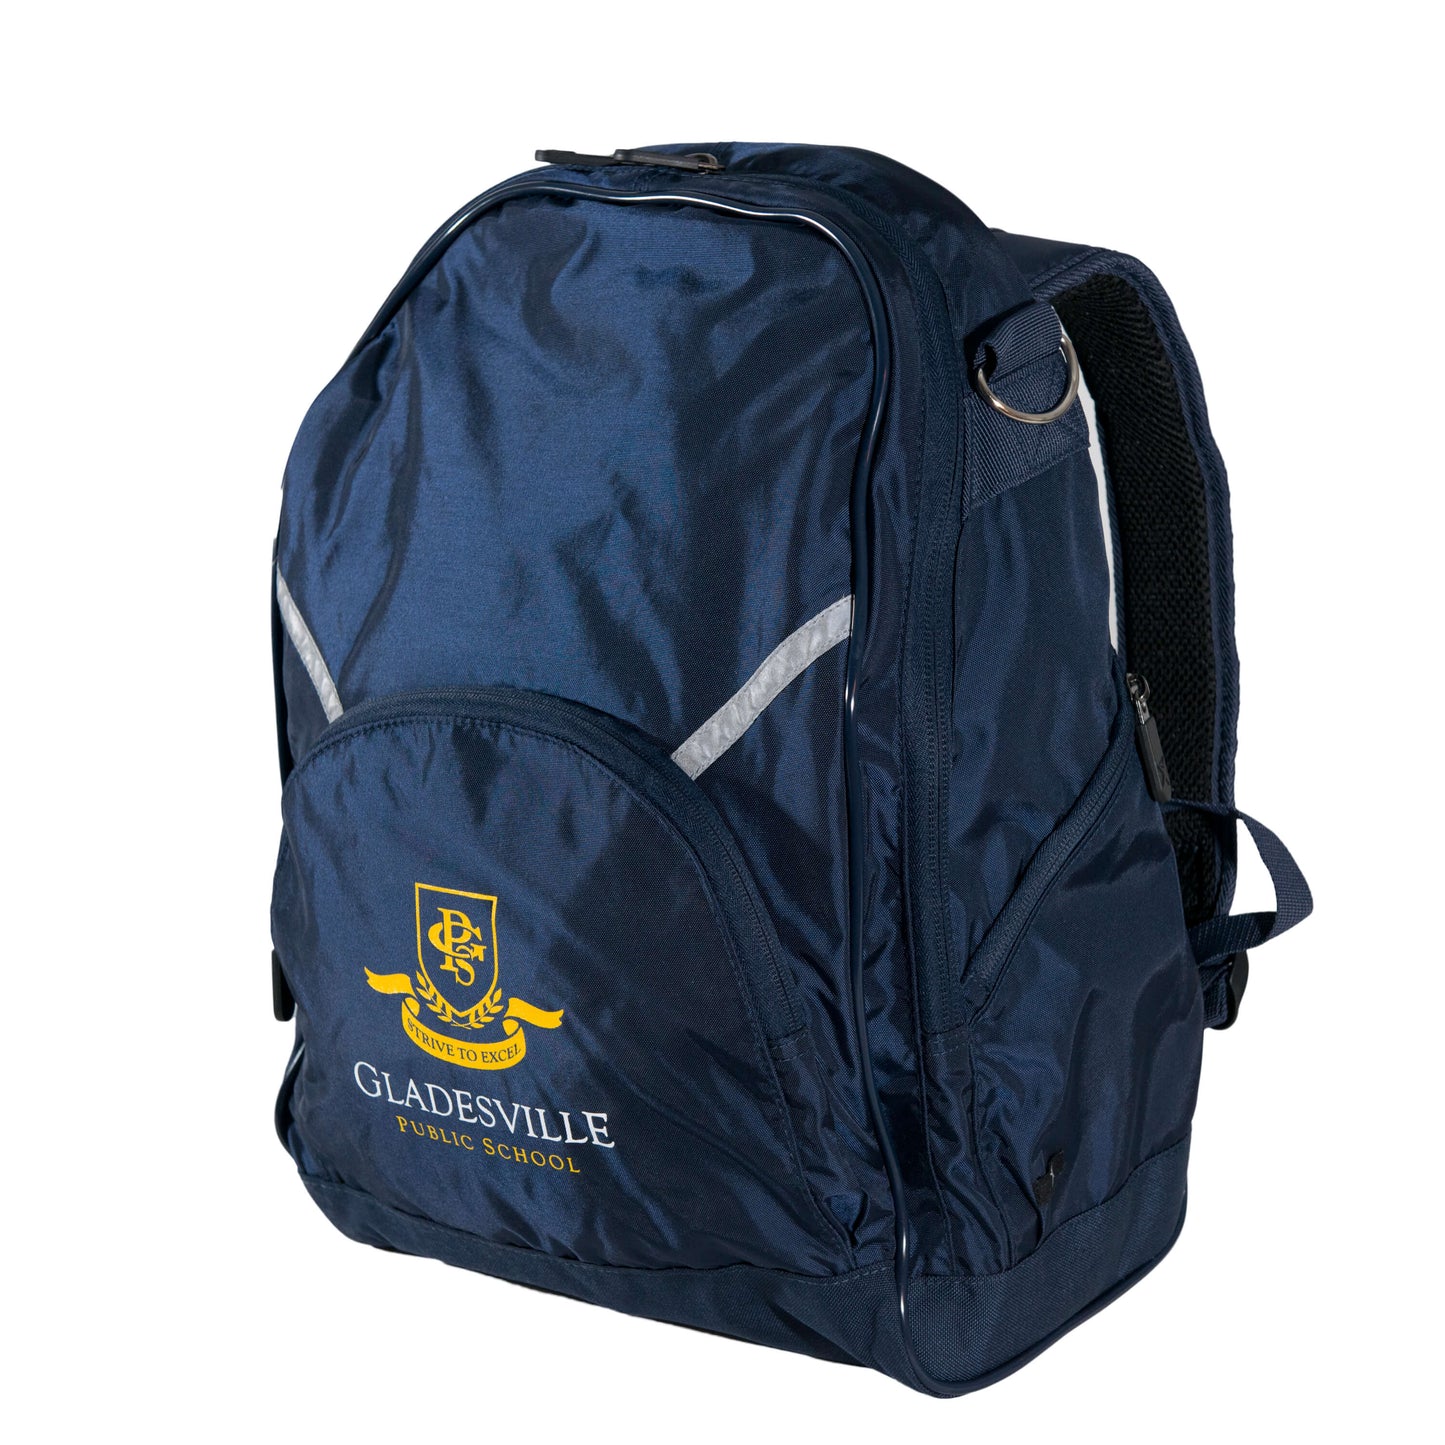 Gladesville Public School Backpack